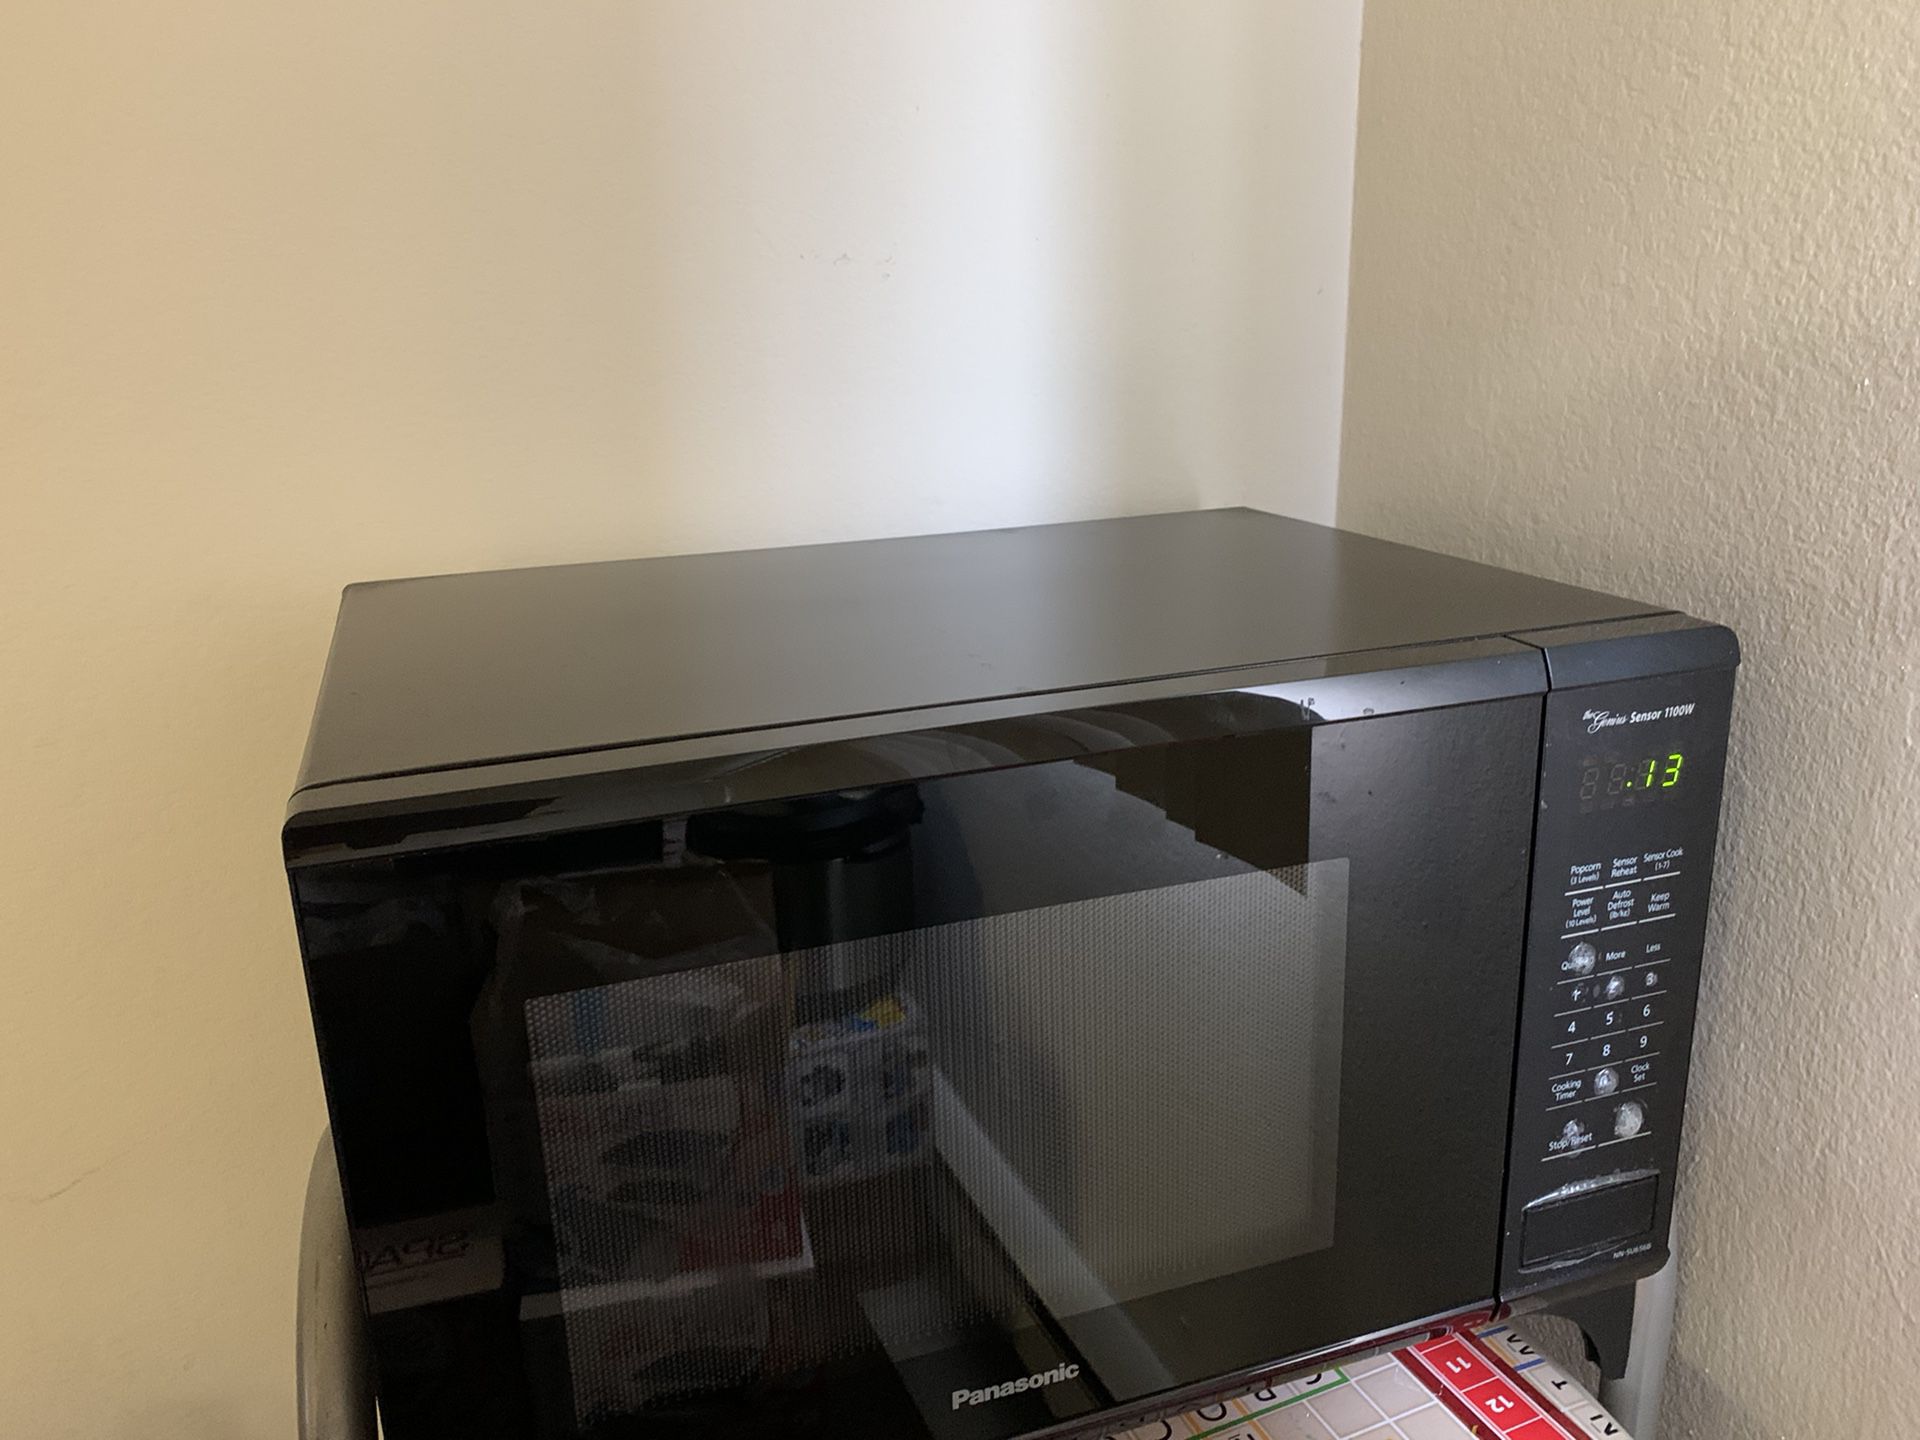 Panasonic NN-SU656B microwave in very good condition for sale (OBO)